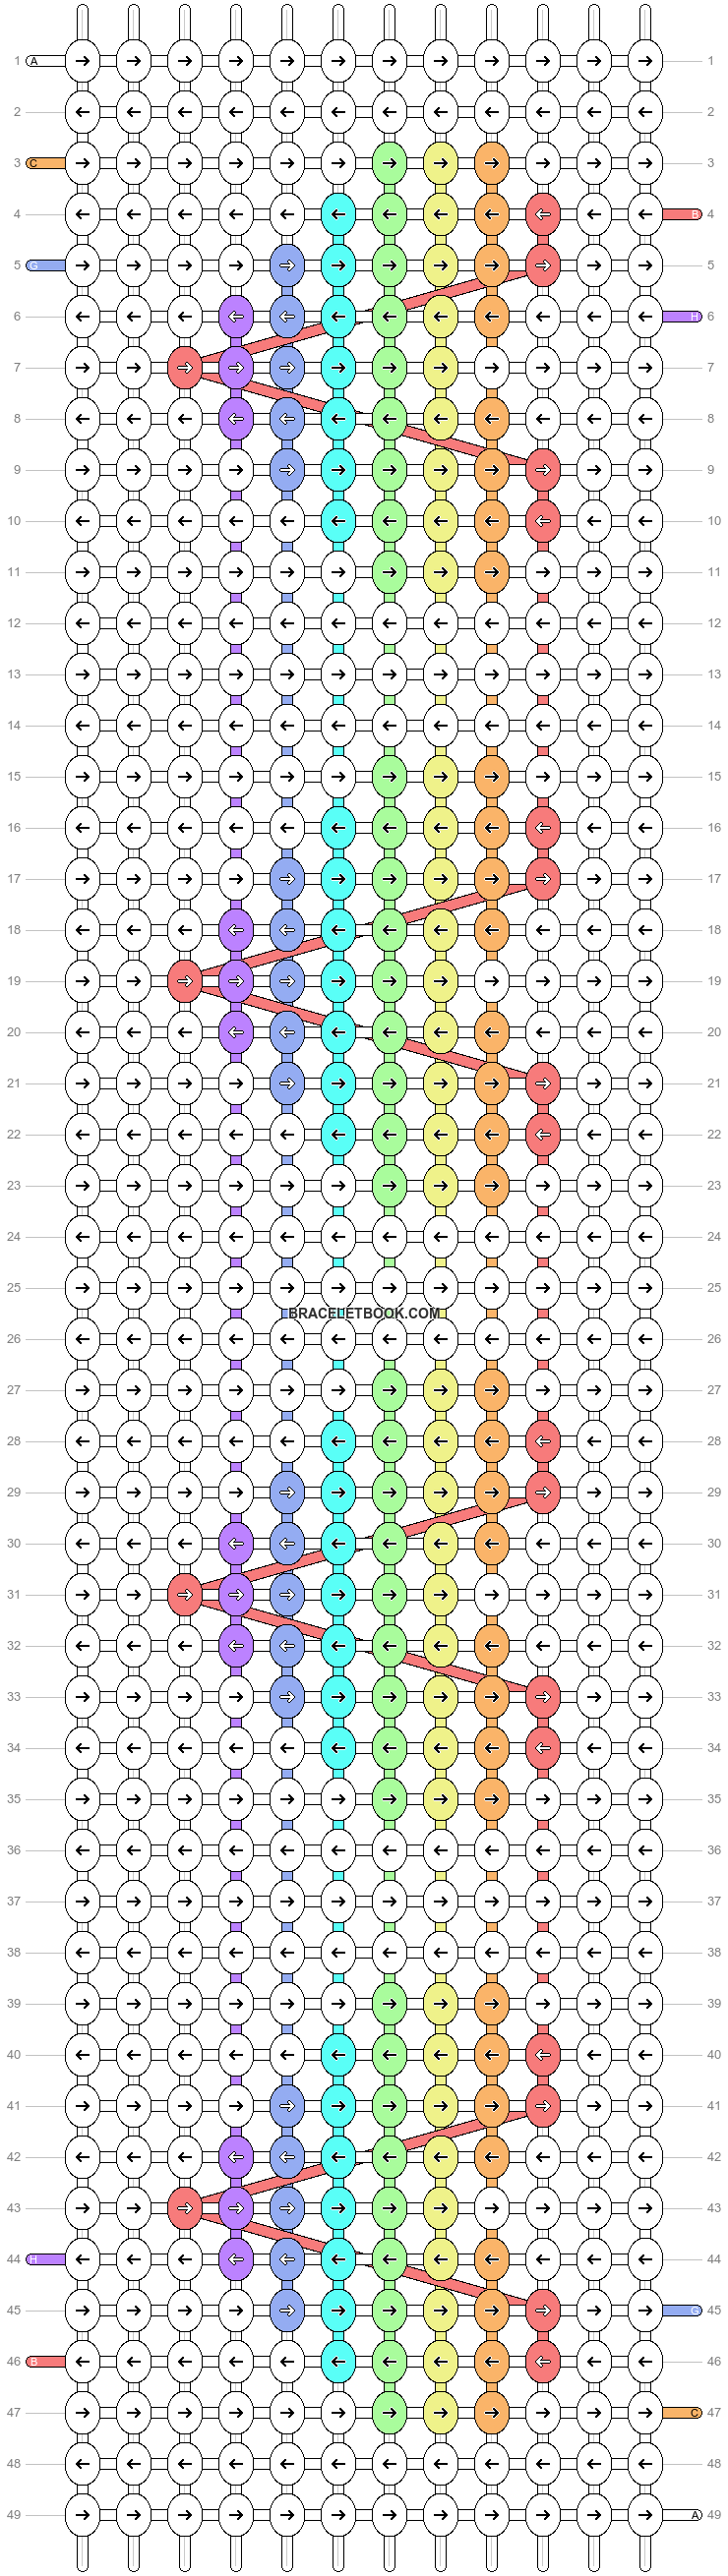 Alpha pattern #18714 variation #78728 pattern